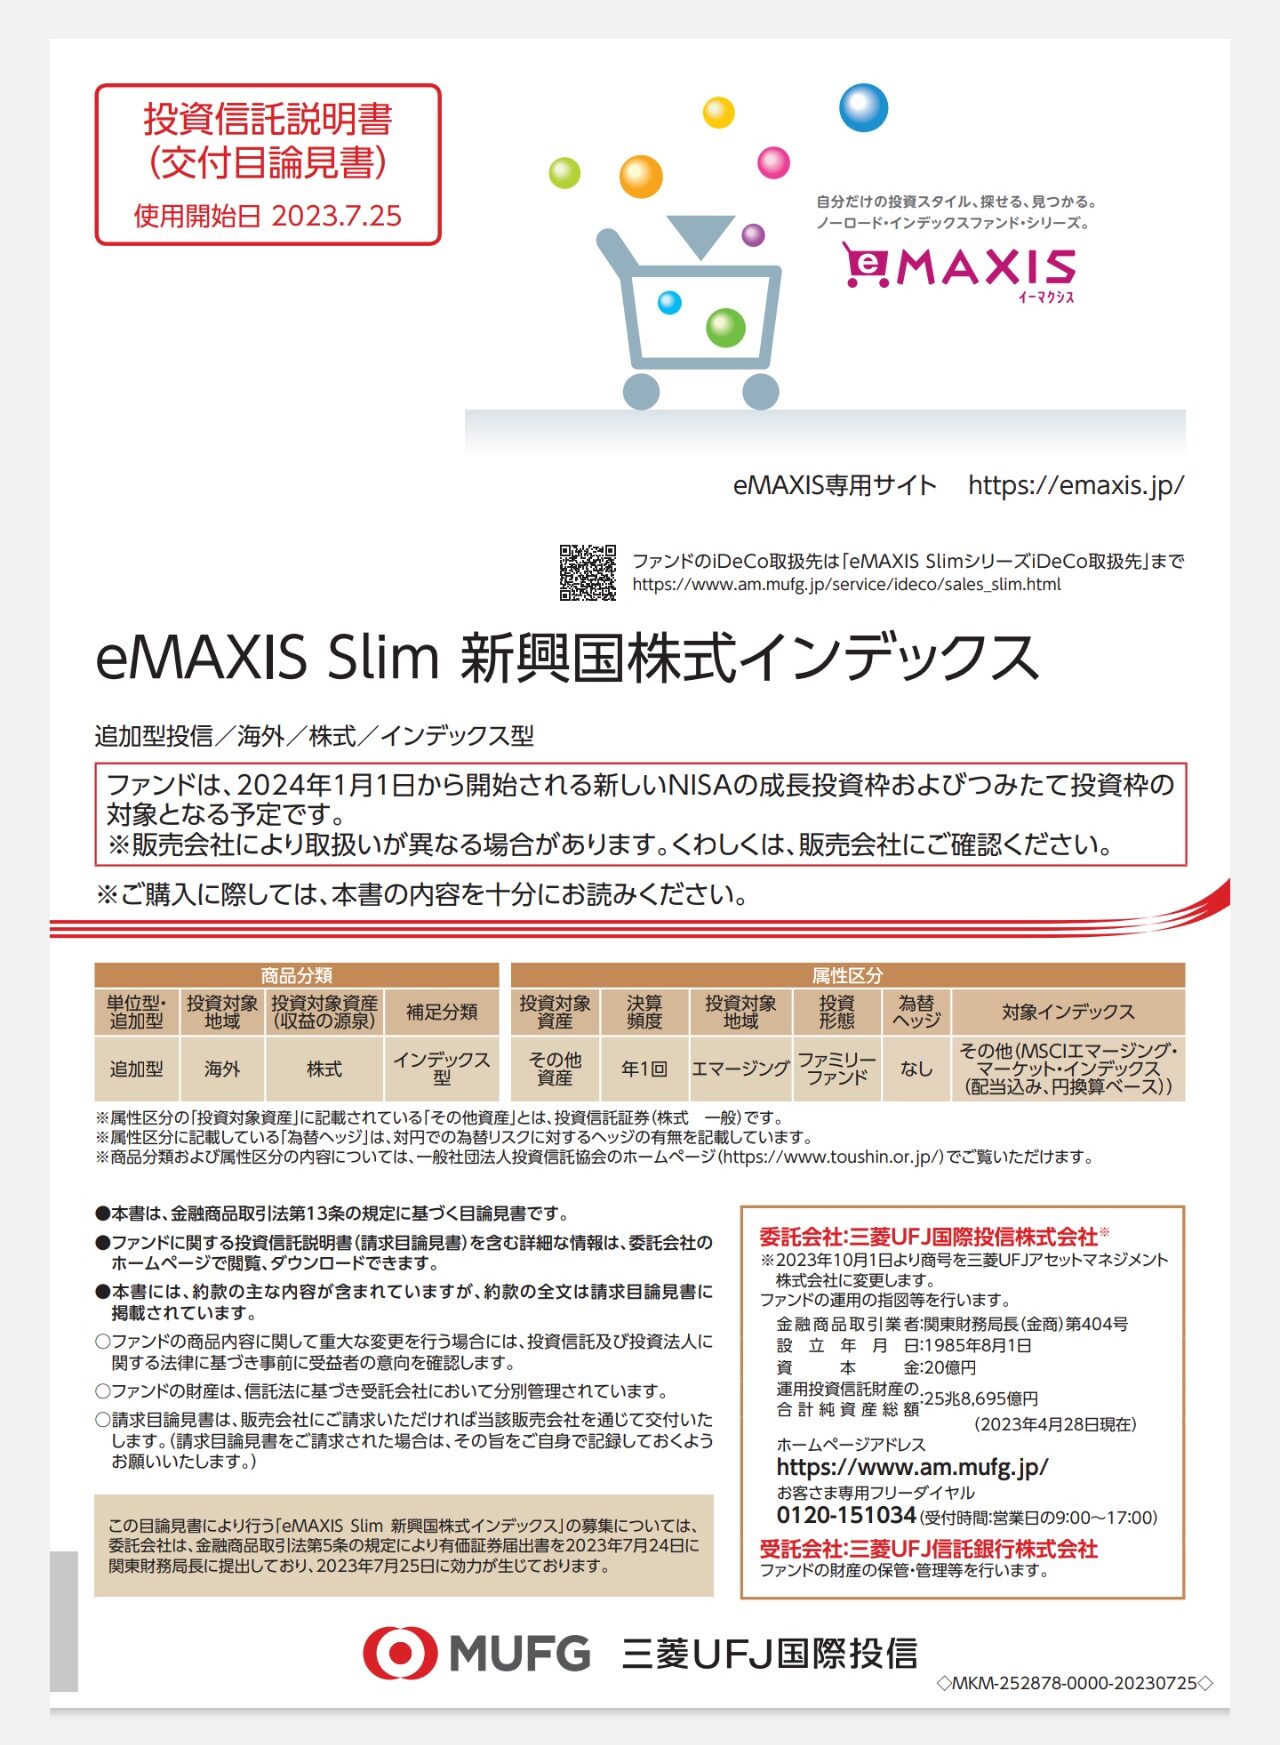 eMAXIS Slim 新興国株式